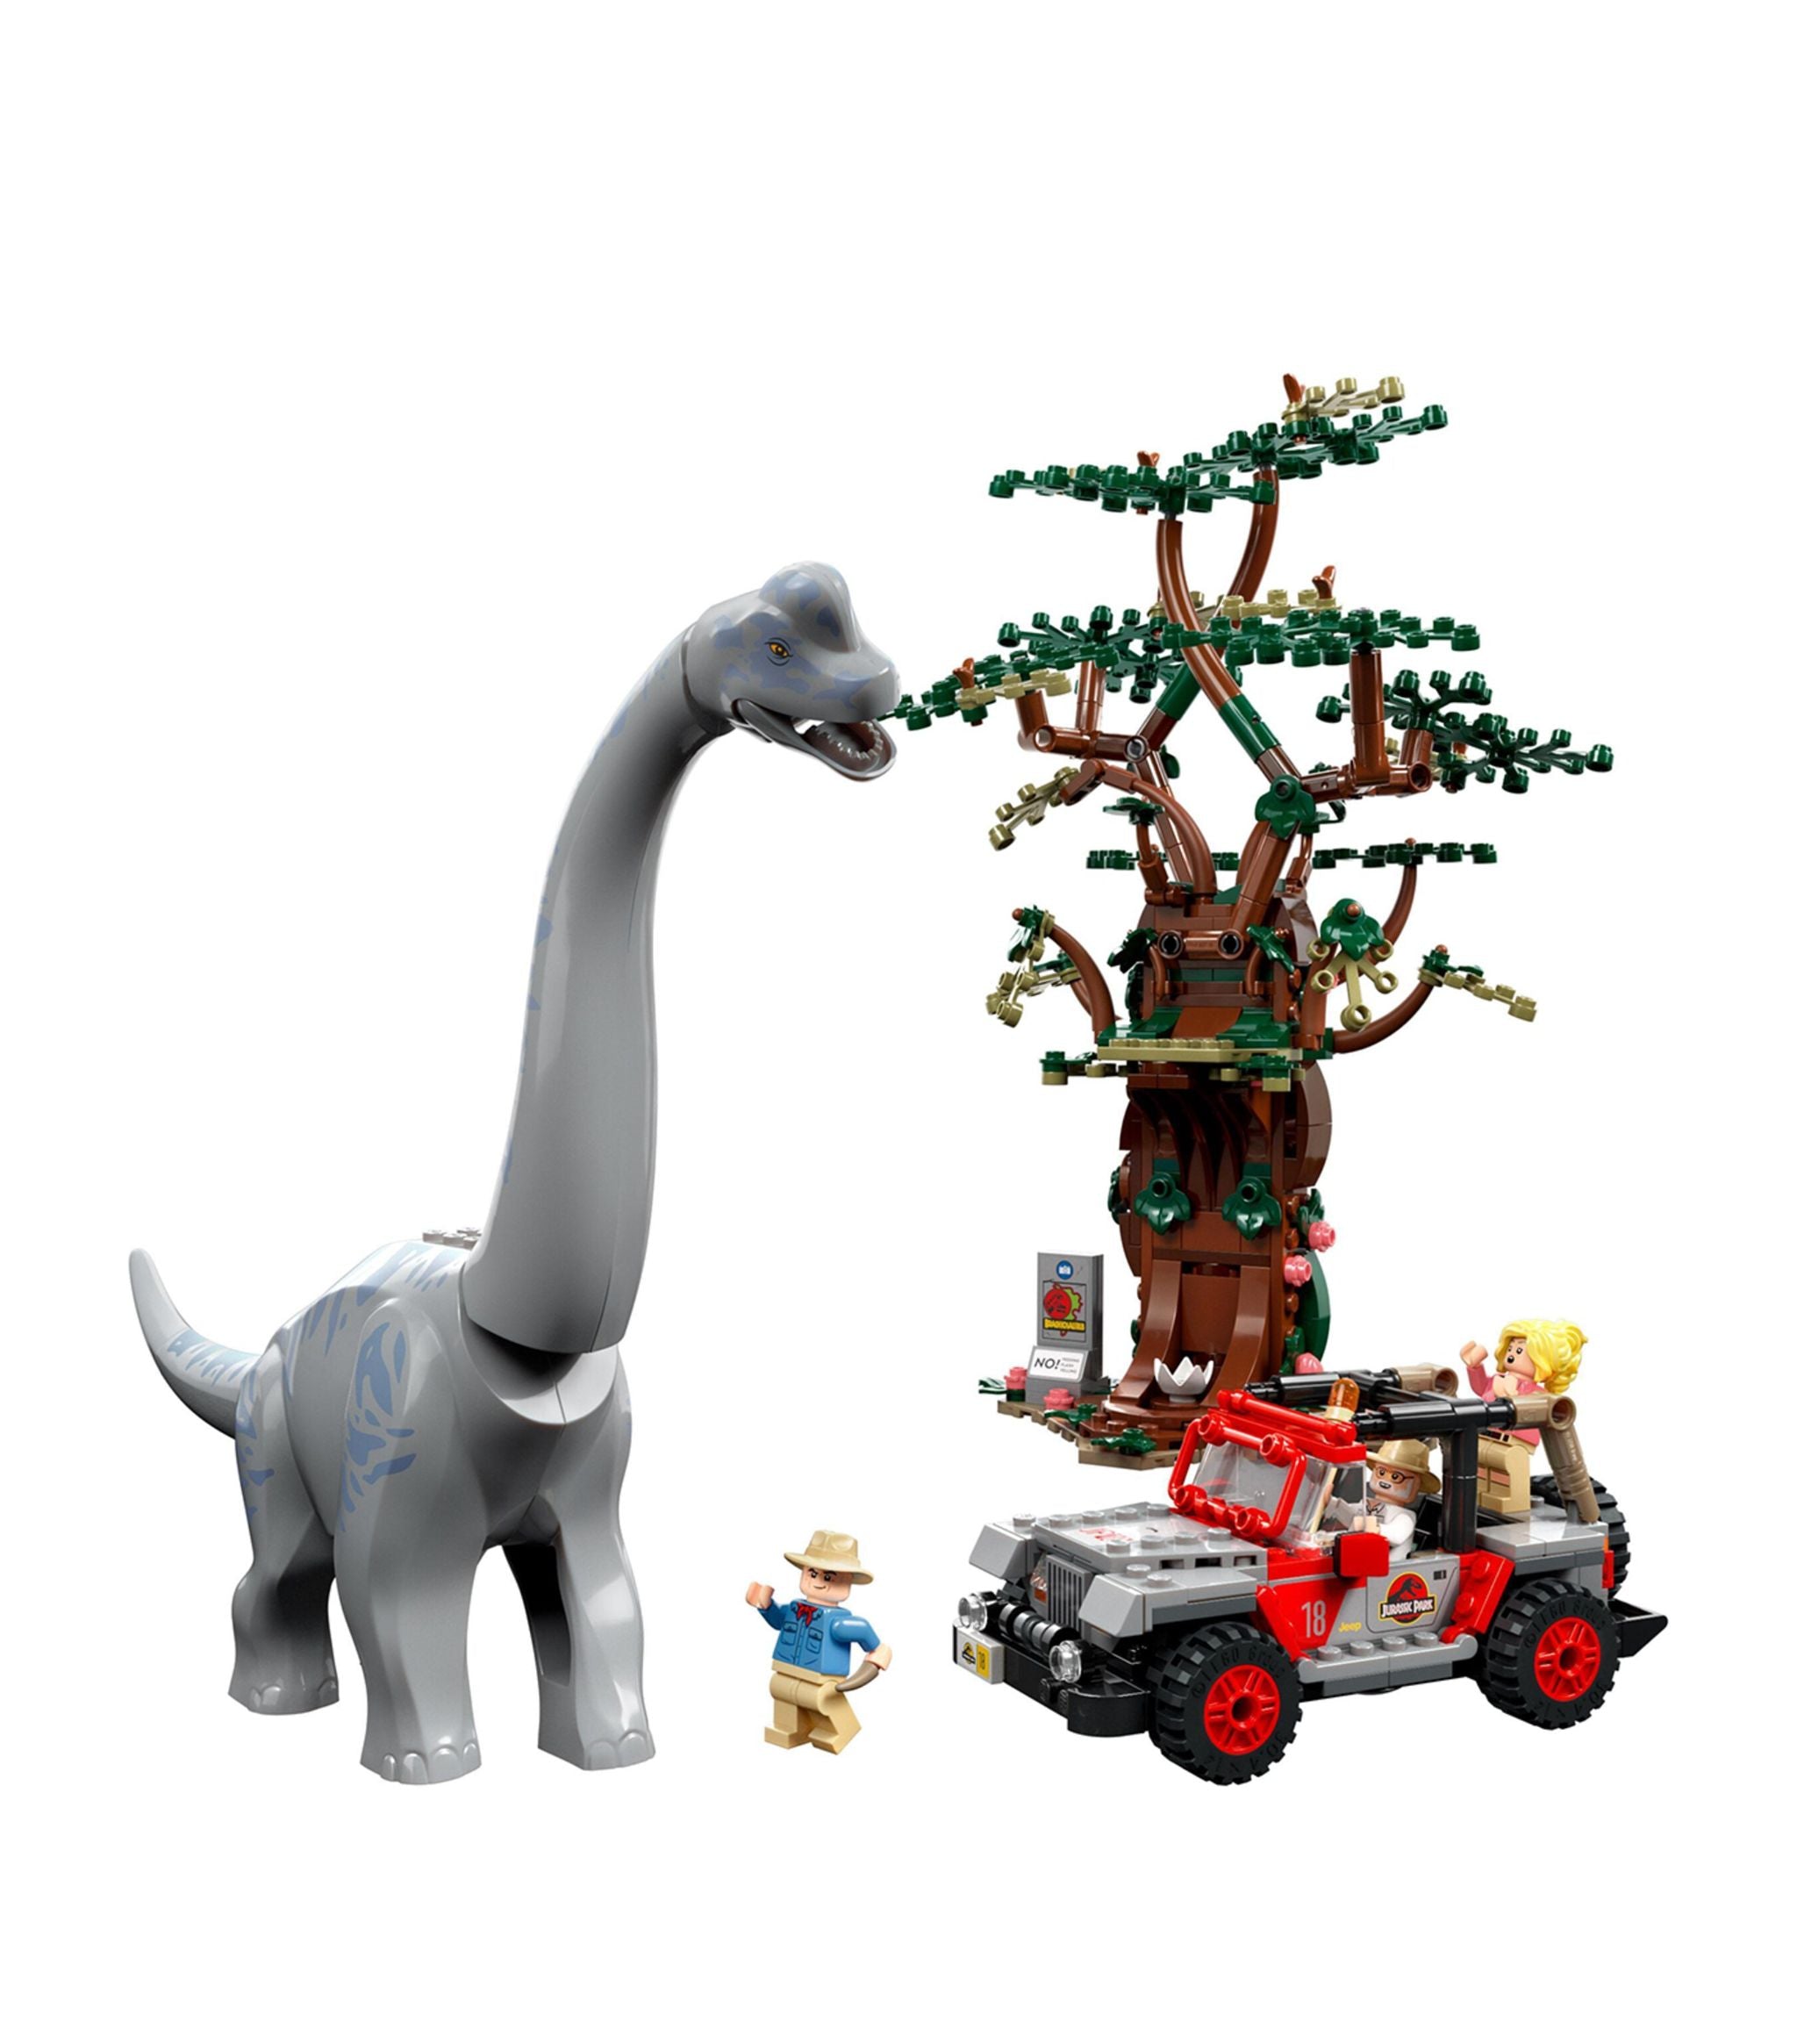 Lego 76960  Brachiosaurus Discovery